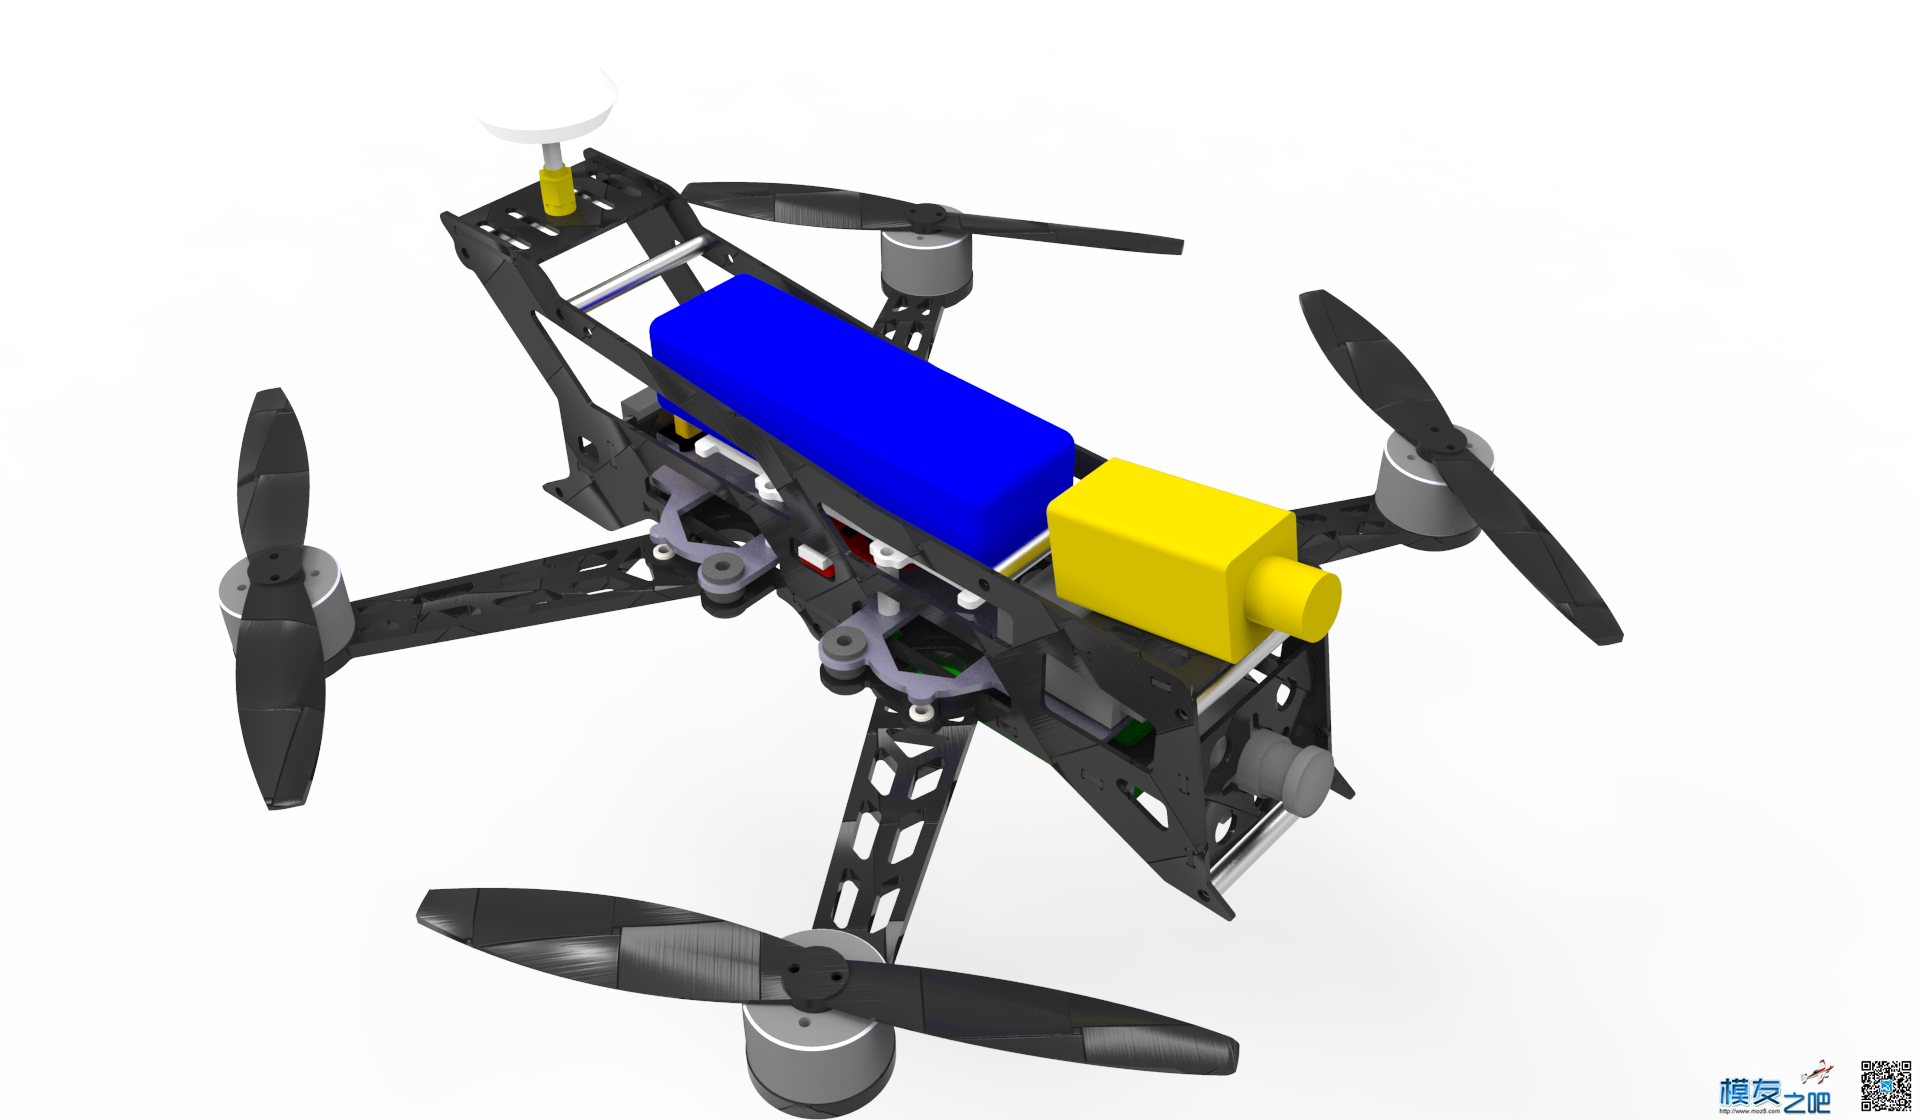 AlienCopter 穿越者V 新品首发 穿越机,多旋翼,电池,天线,图传 作者:xiaoxuexue11111 3968 